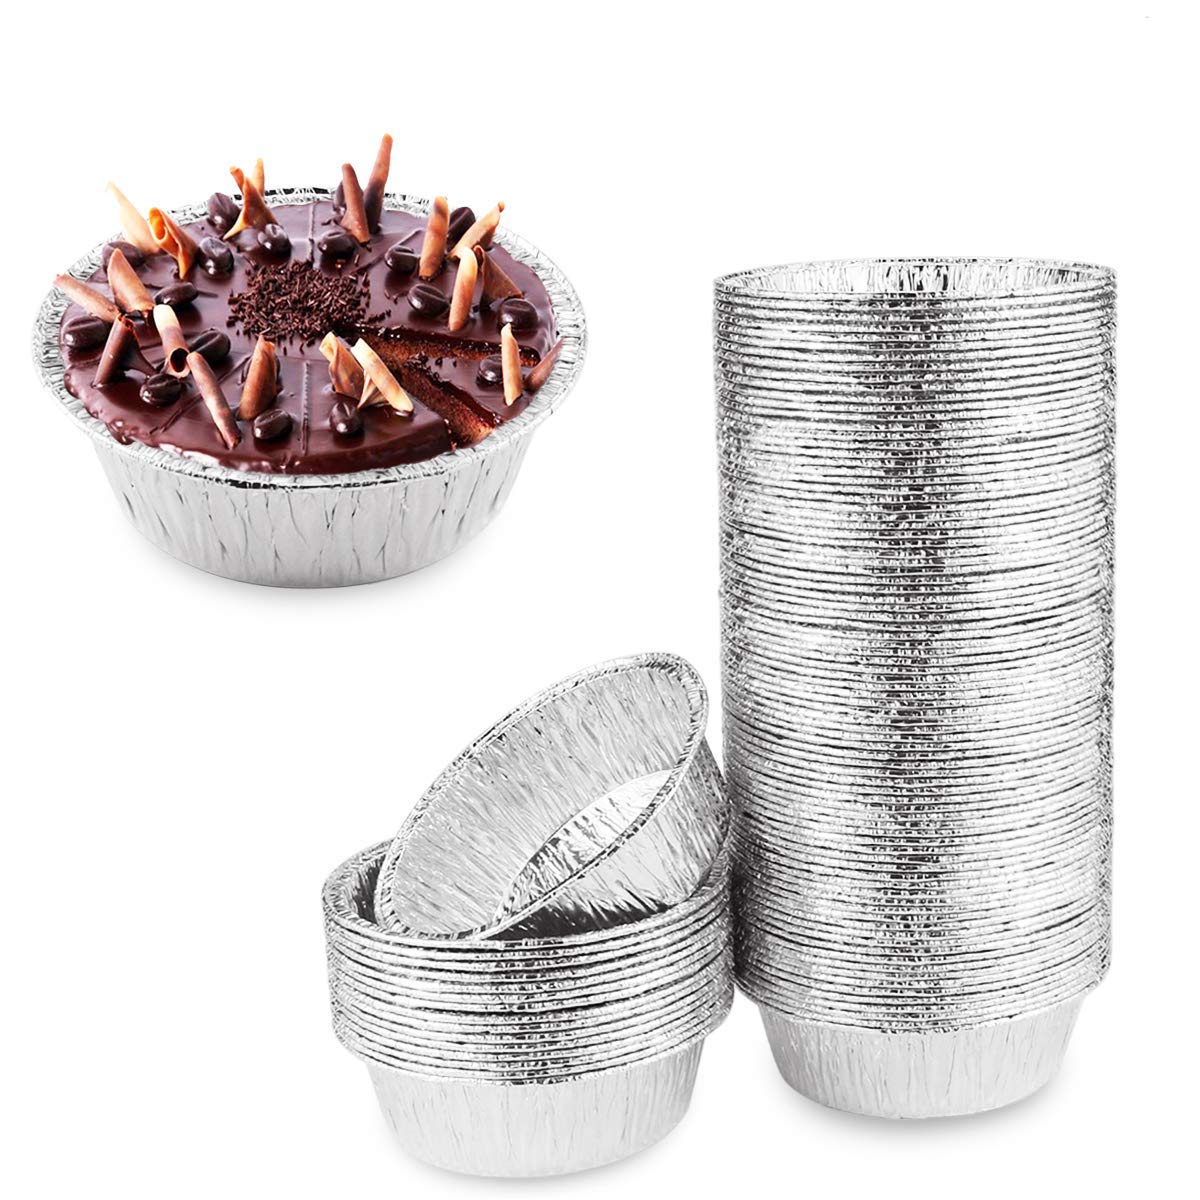 Oopsu 100 Pack 4" Round Tart Pie Foil Pans Disposable Pans Aluminum Foil Tart & Pie Tins Pans for Baking,Cooking,Storage or Reheating